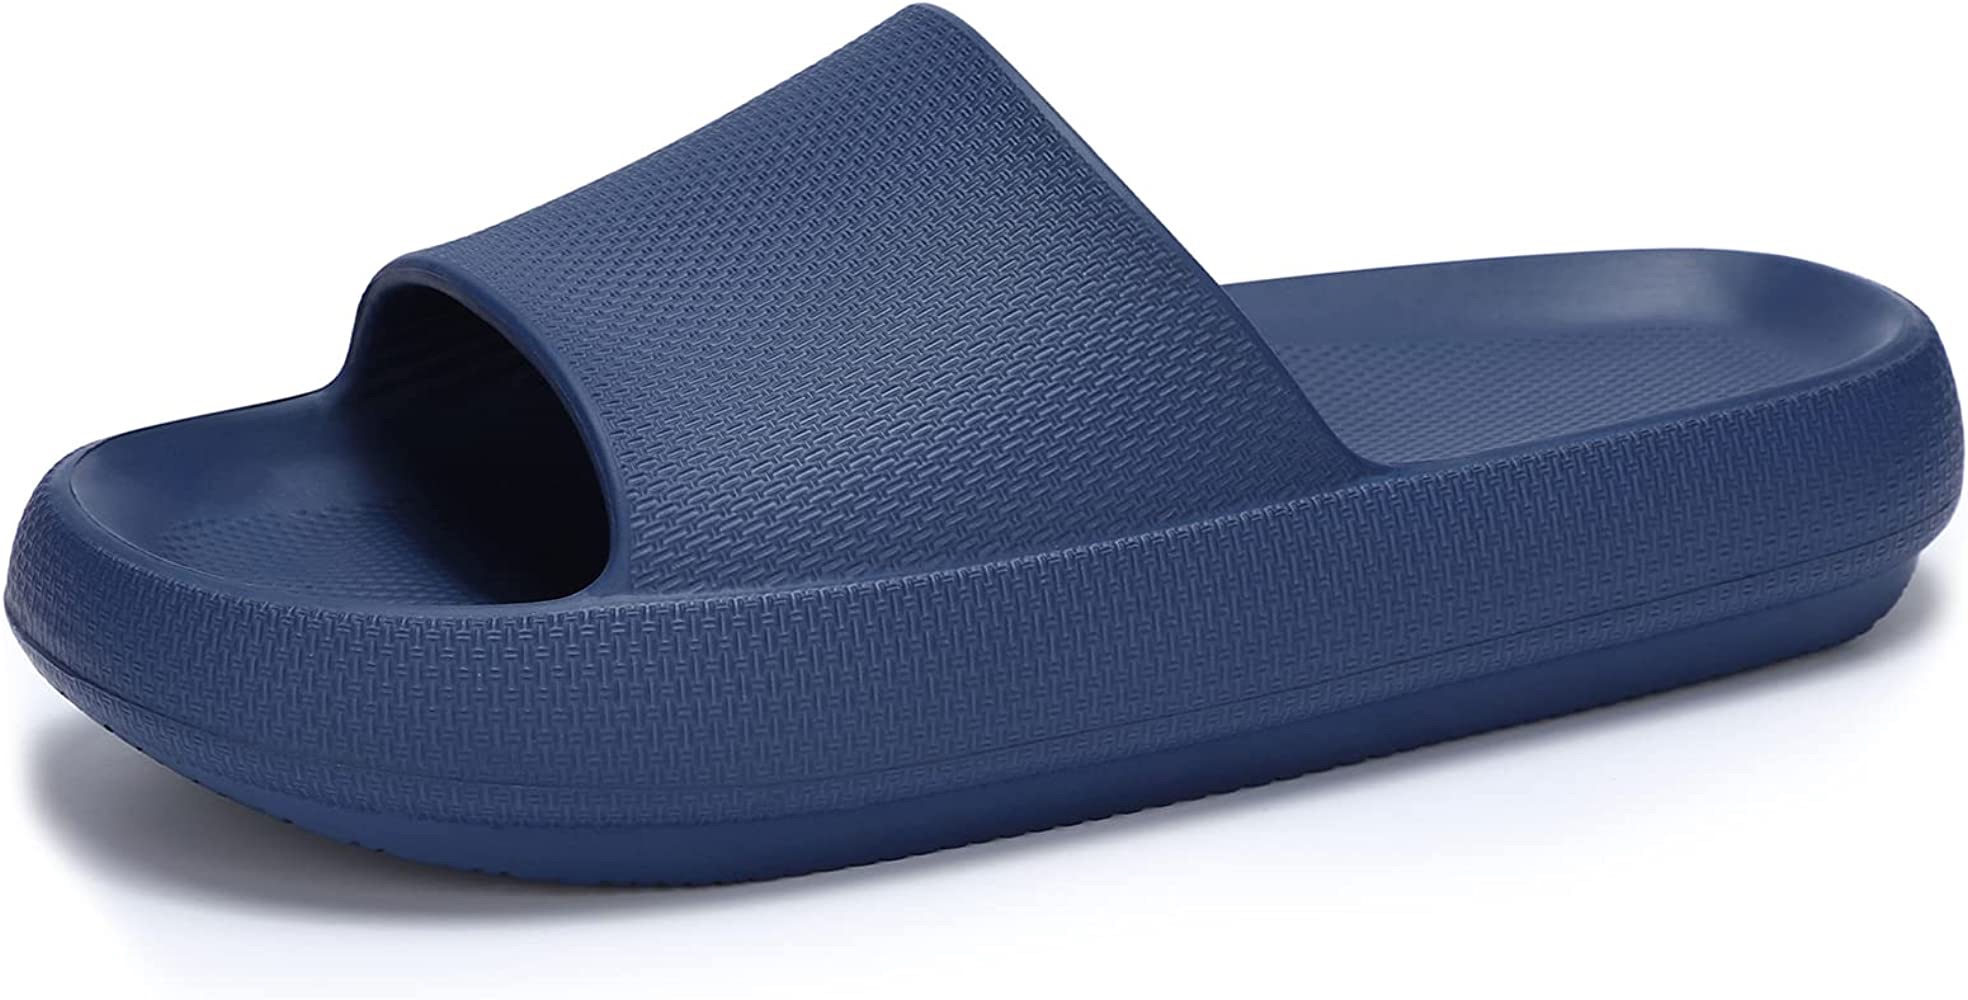 Amazon.com | welltree Cloud Slides for Women Men Pillow Slippers 拖鞋 Non-Slip Bathroom Shower Sandals Soft Thick Sole Indoor and Outdoor Slides,Navy blue,7.5-8.5 Women/6-7 Men | Slides